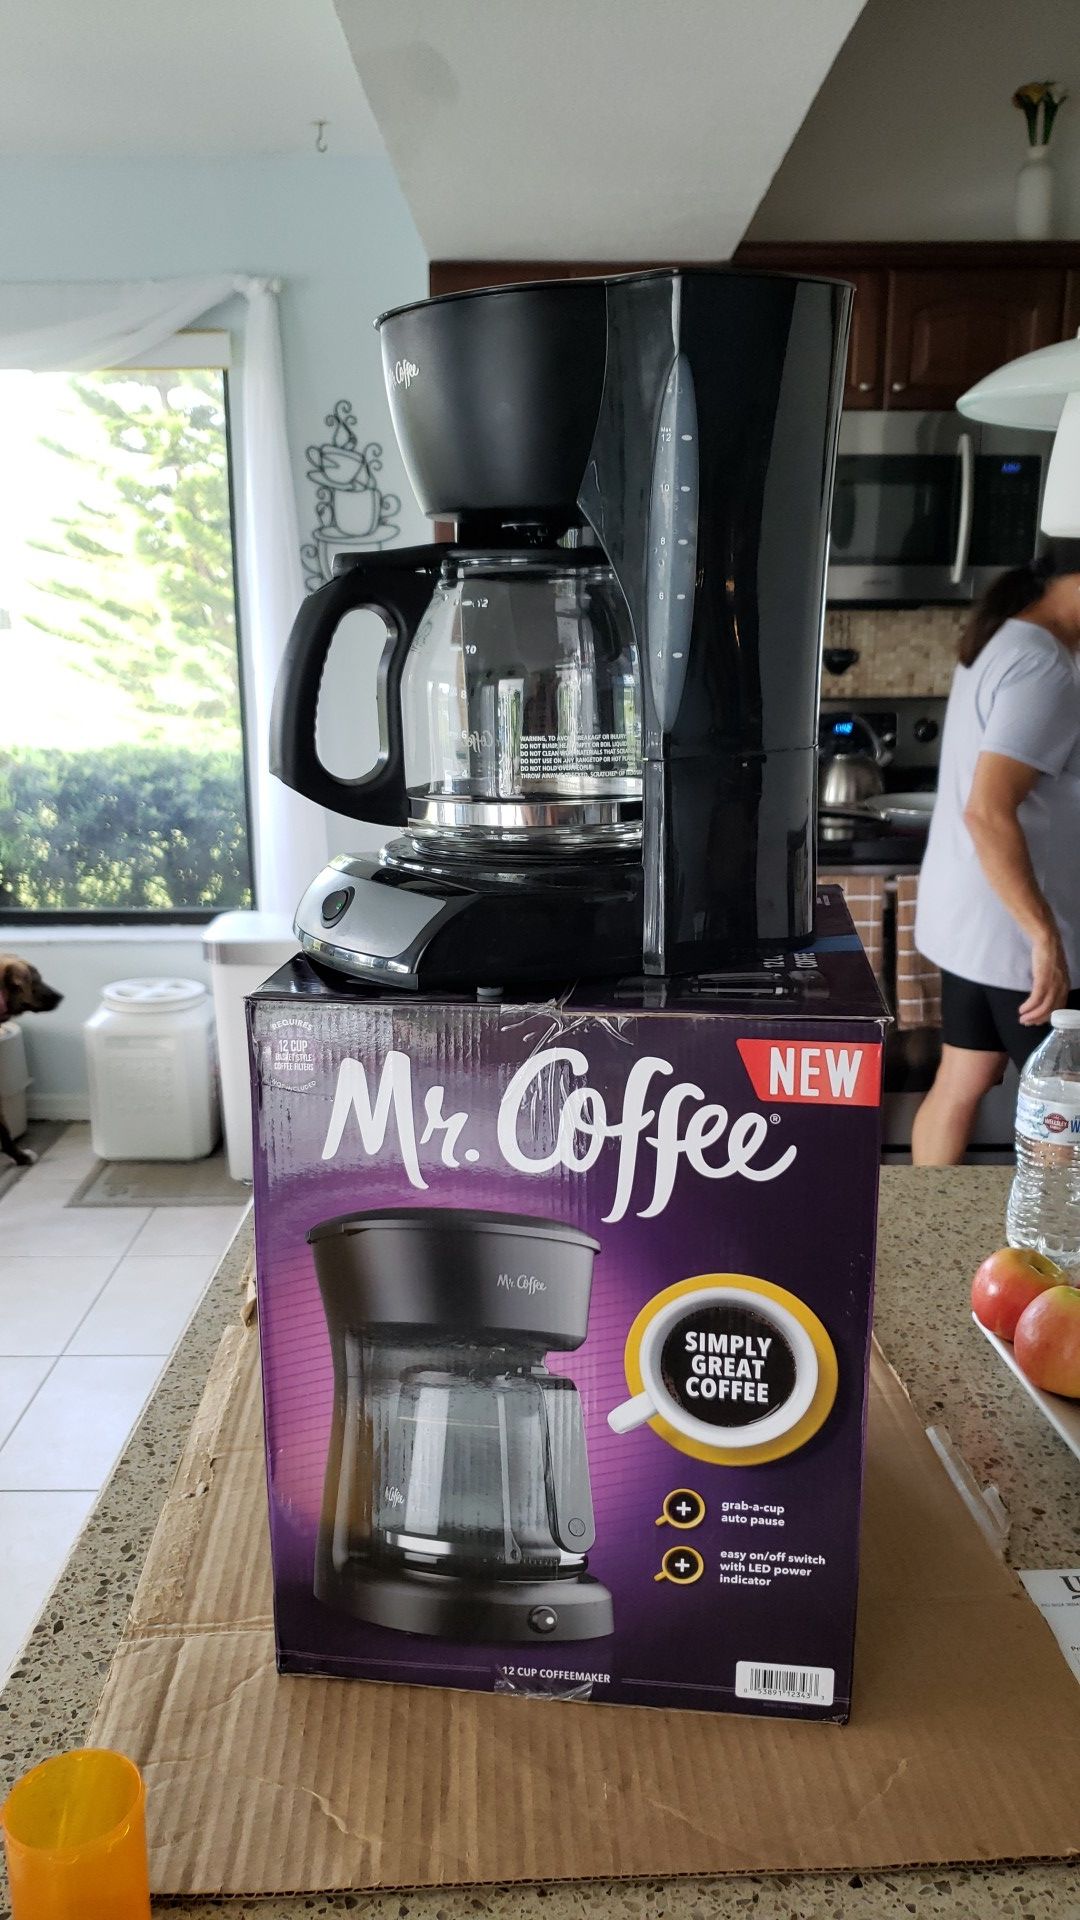 Mr. Coffee maker